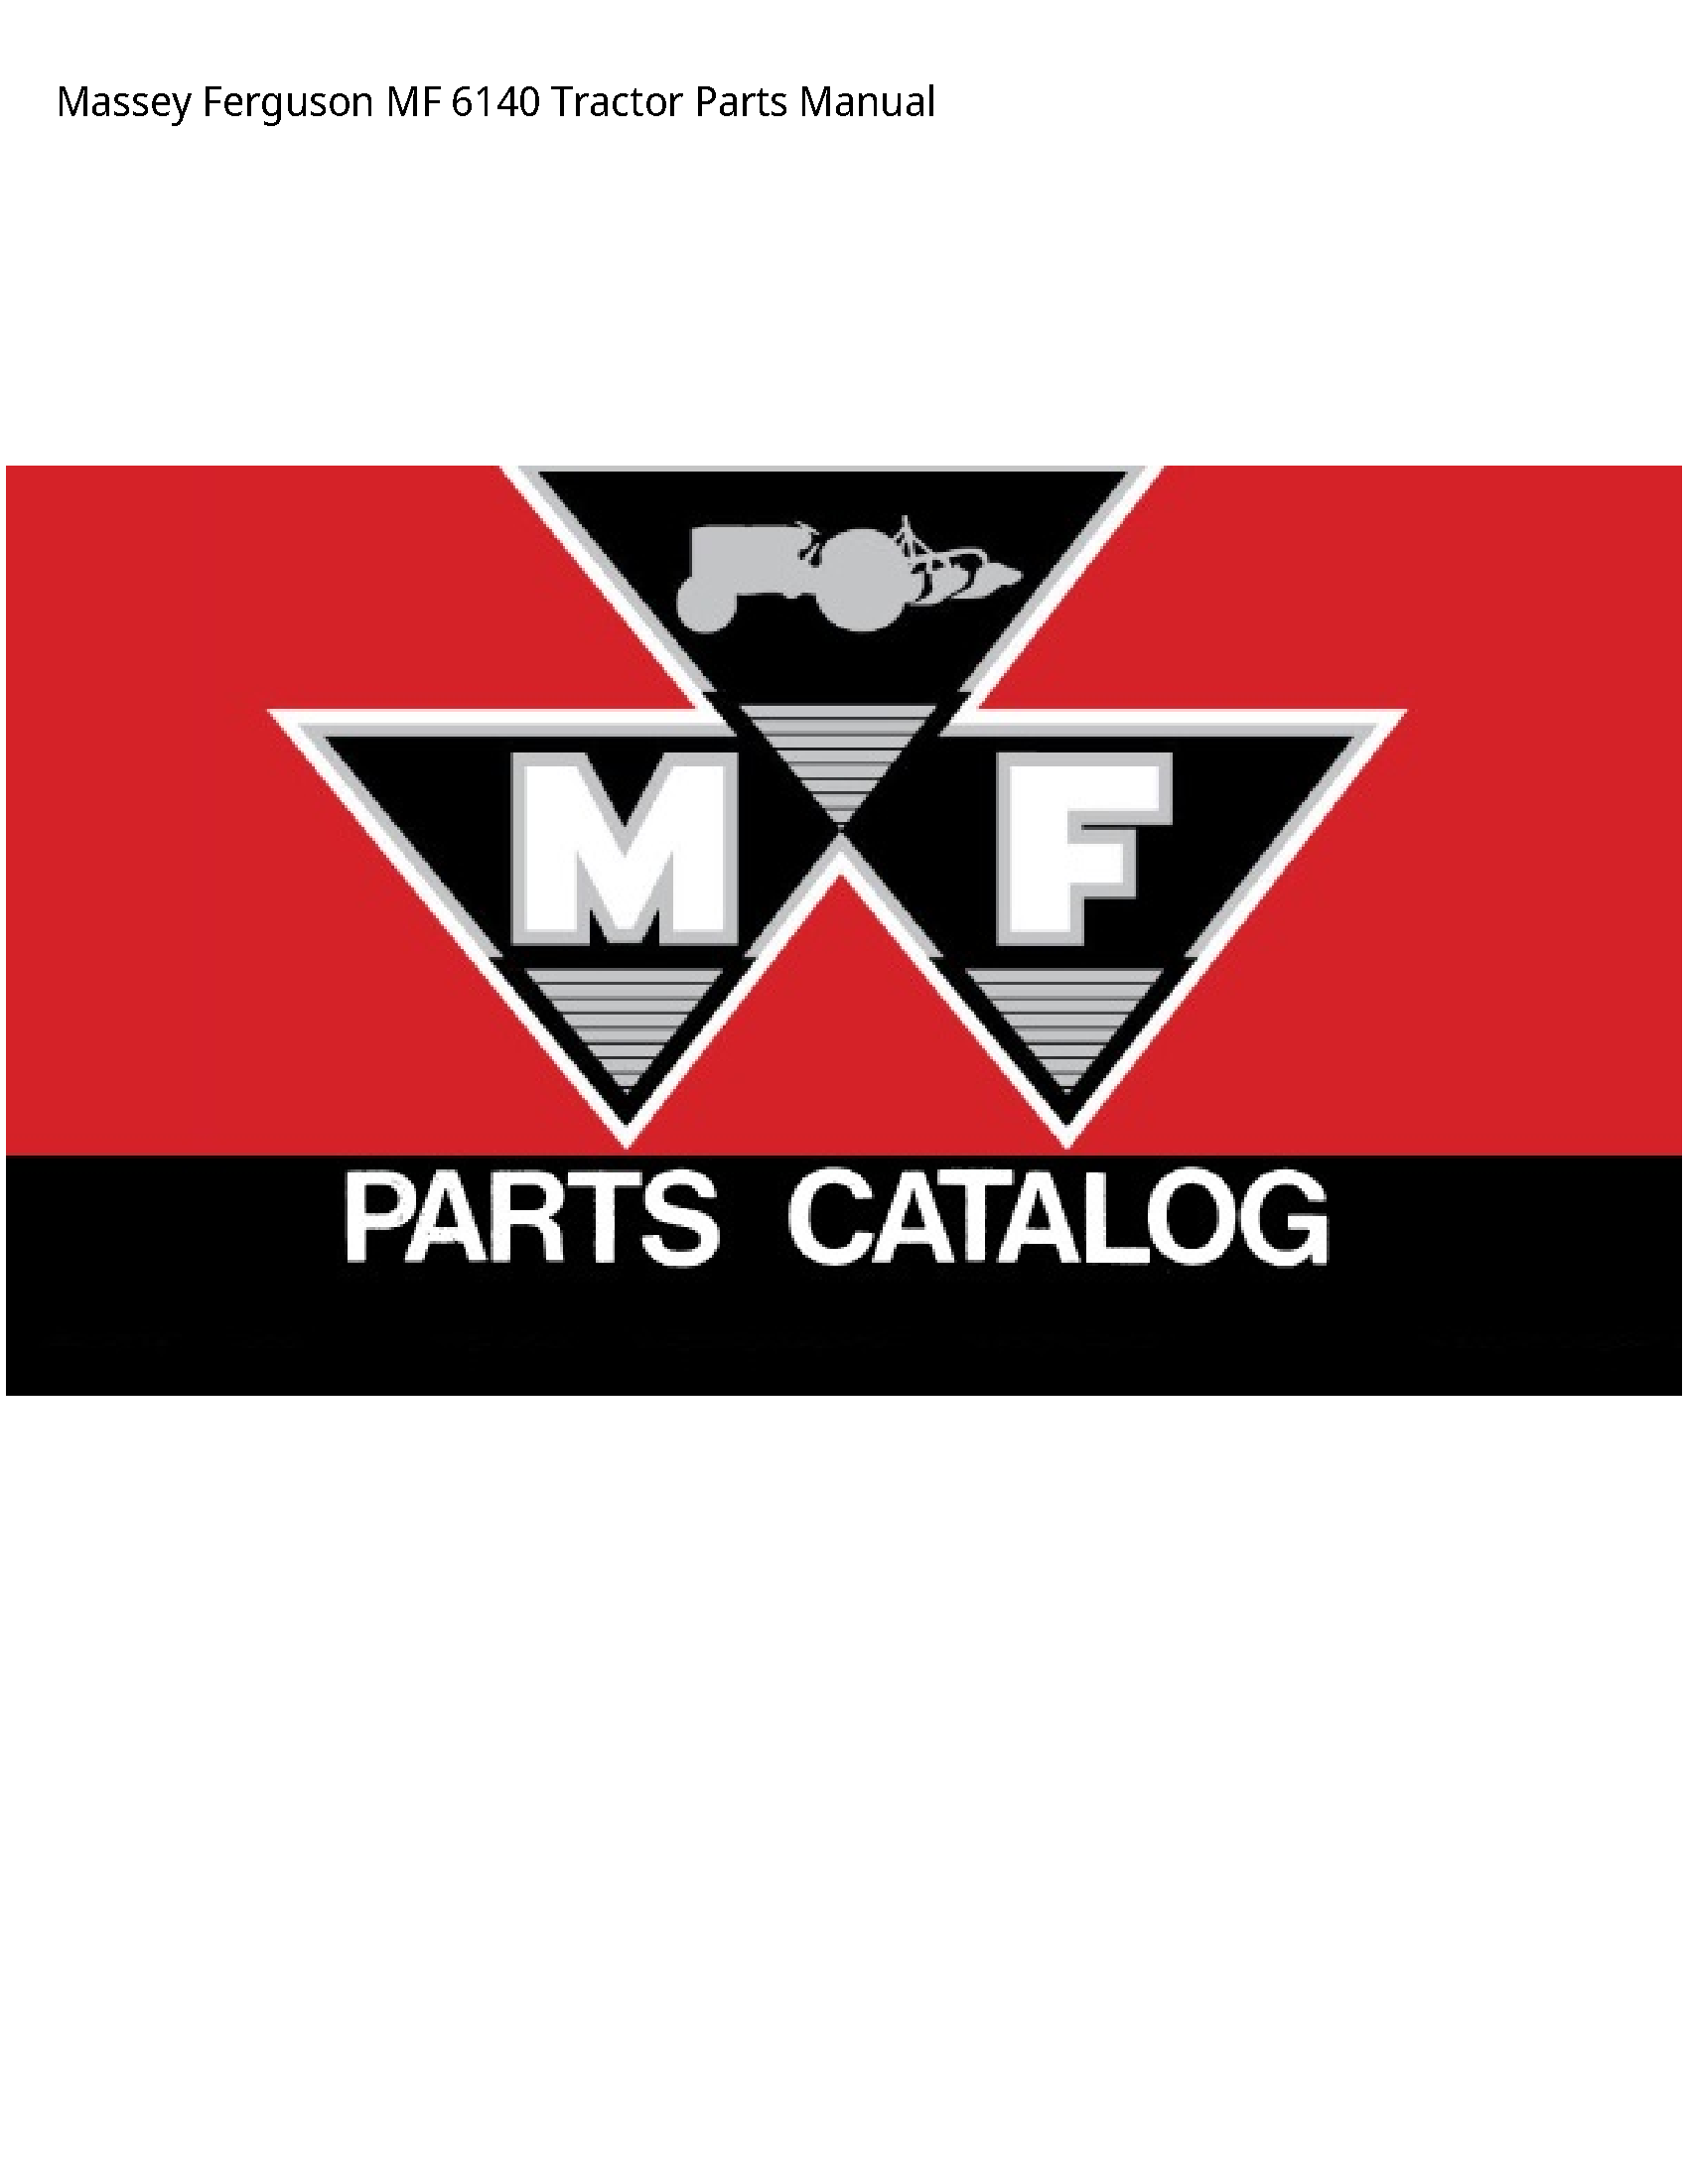 Massey Ferguson 6140 MF Tractor Parts manual